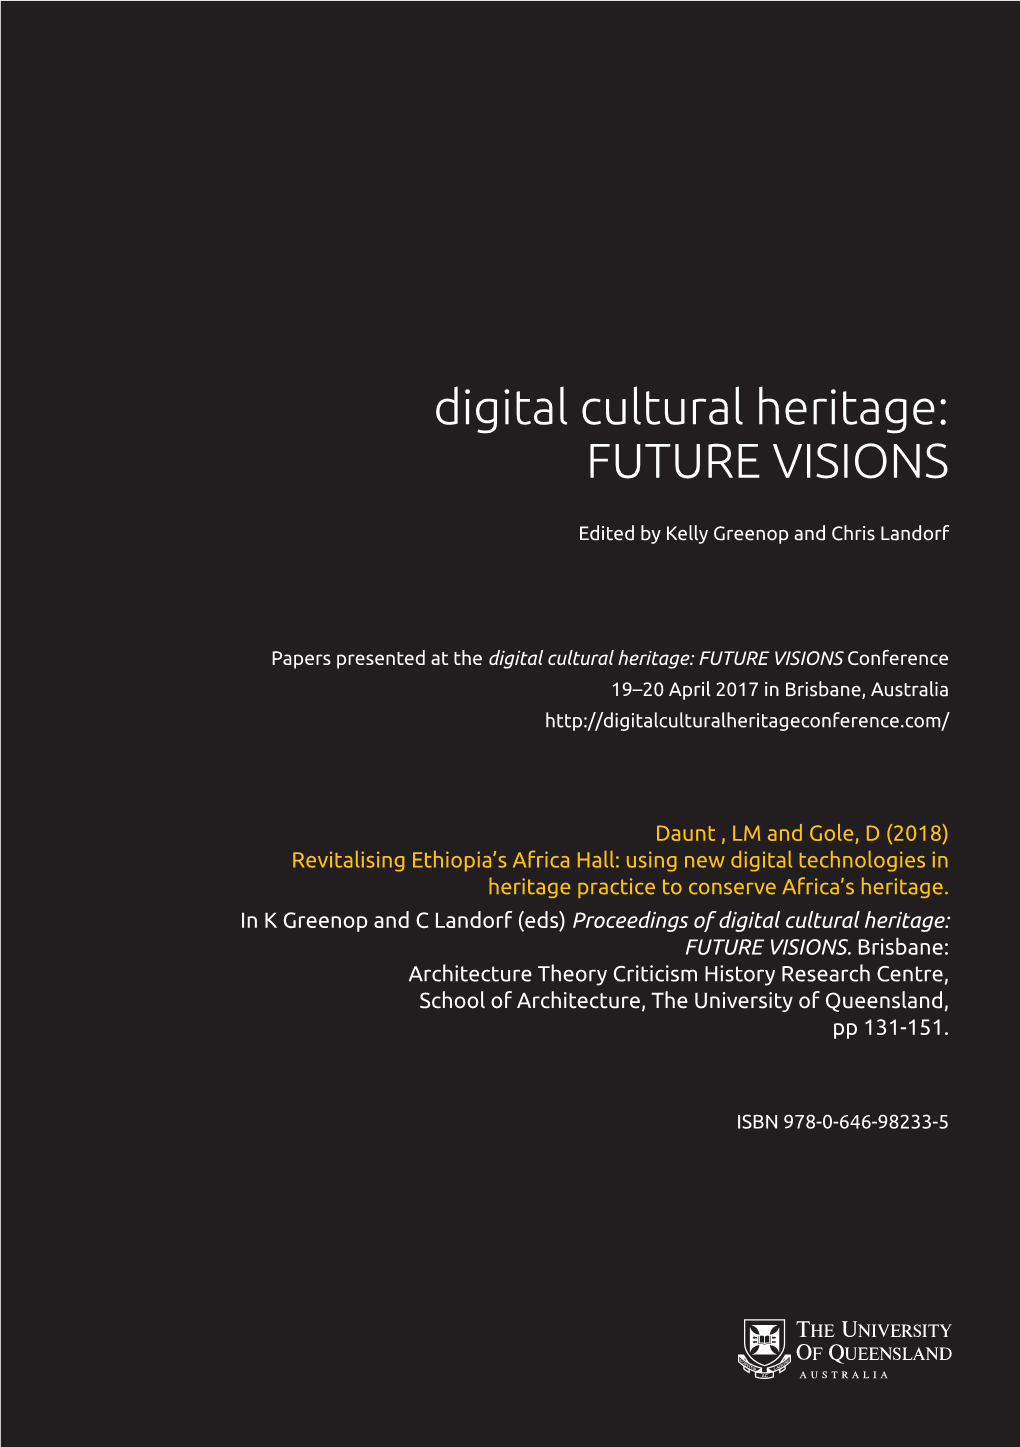 Digital Cultural Heritage: FUTURE VISIONS